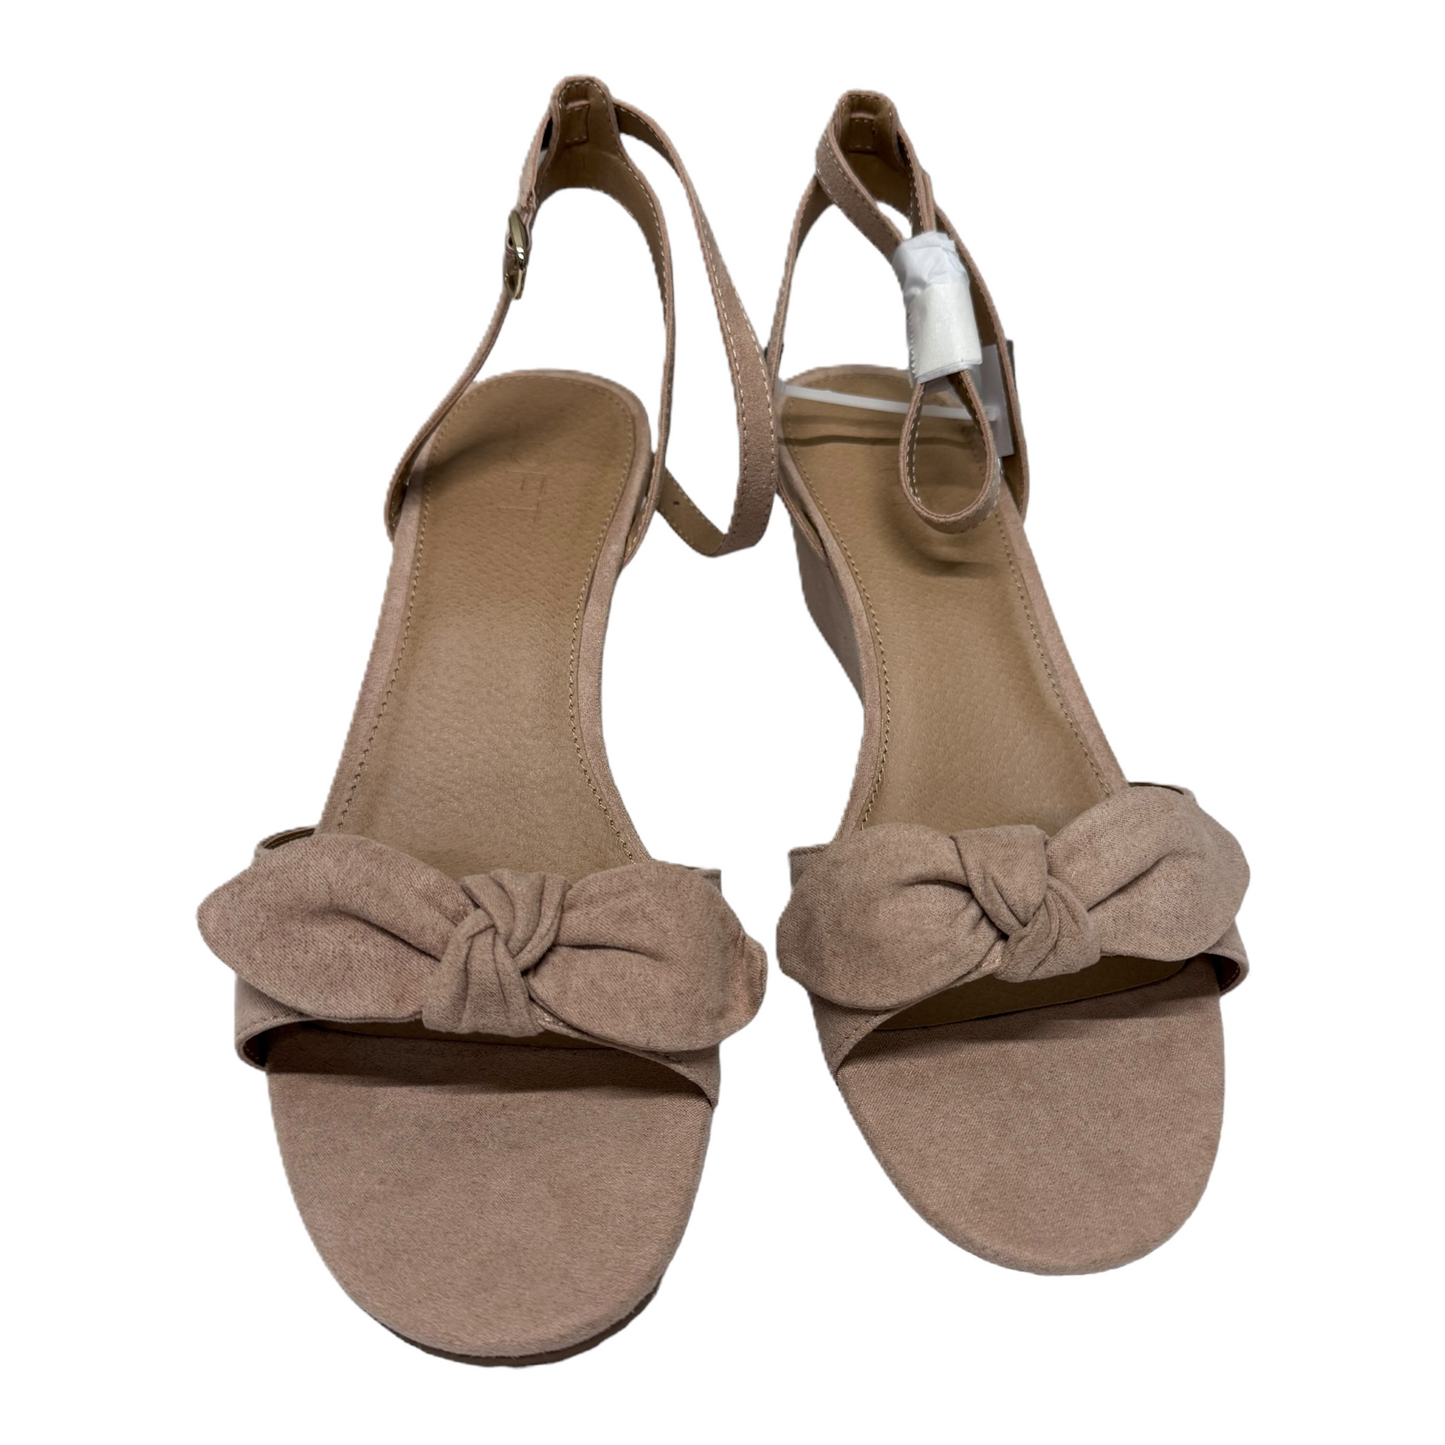 Sandals Heels Wedge By Loft  Size: 9.5